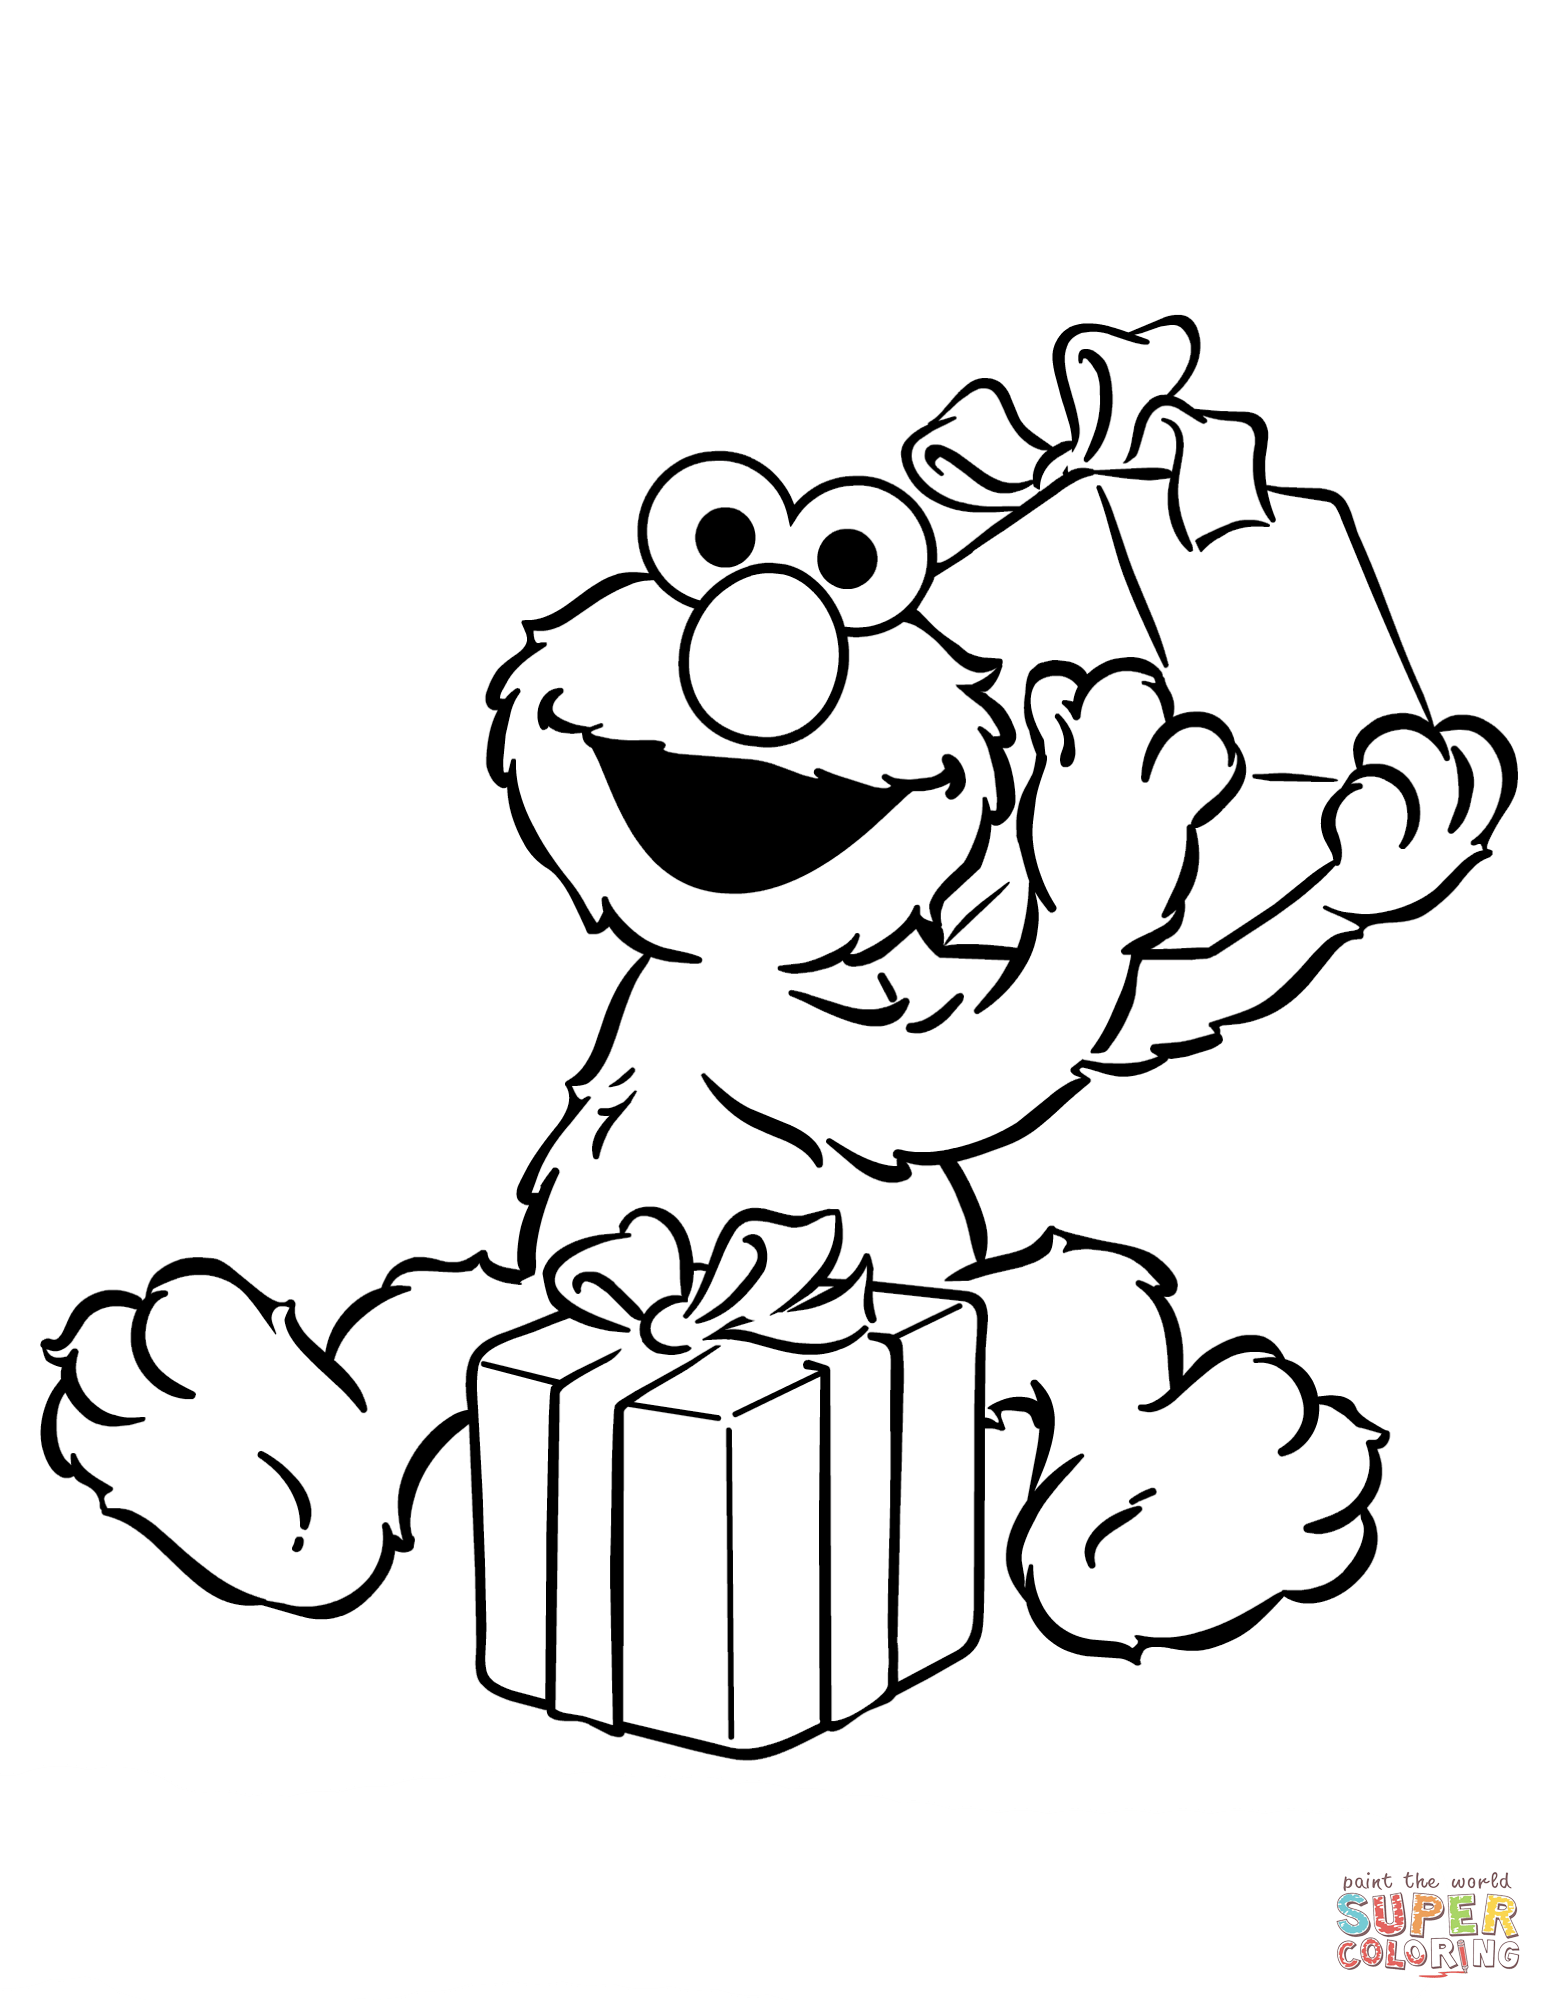 Elmo opening birthday presents